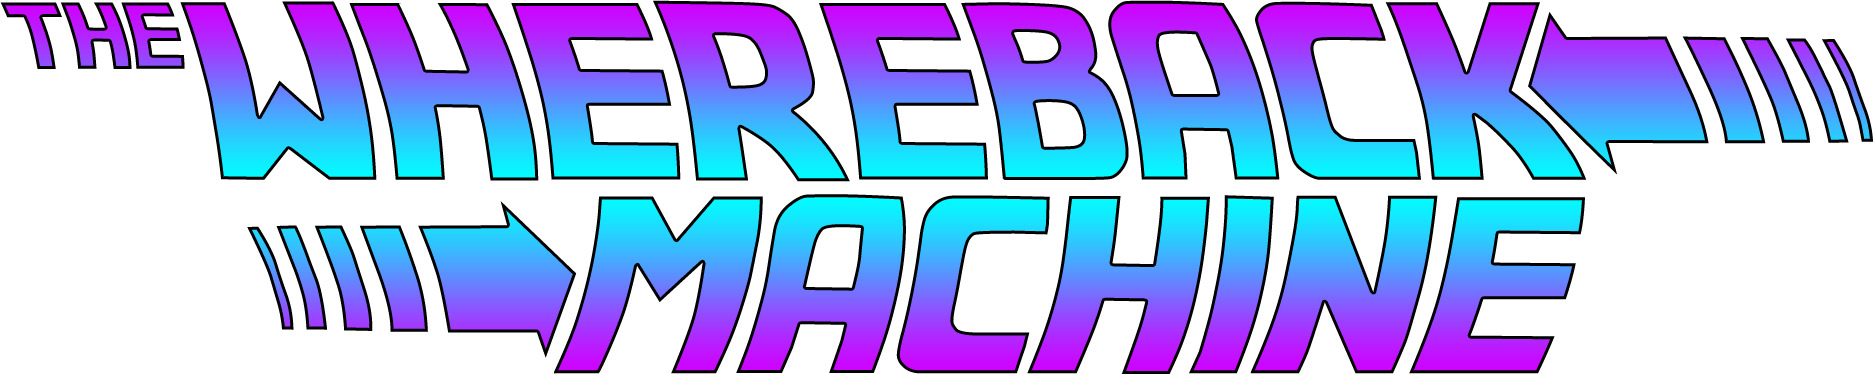 The Whereback Machine - Header/Logo